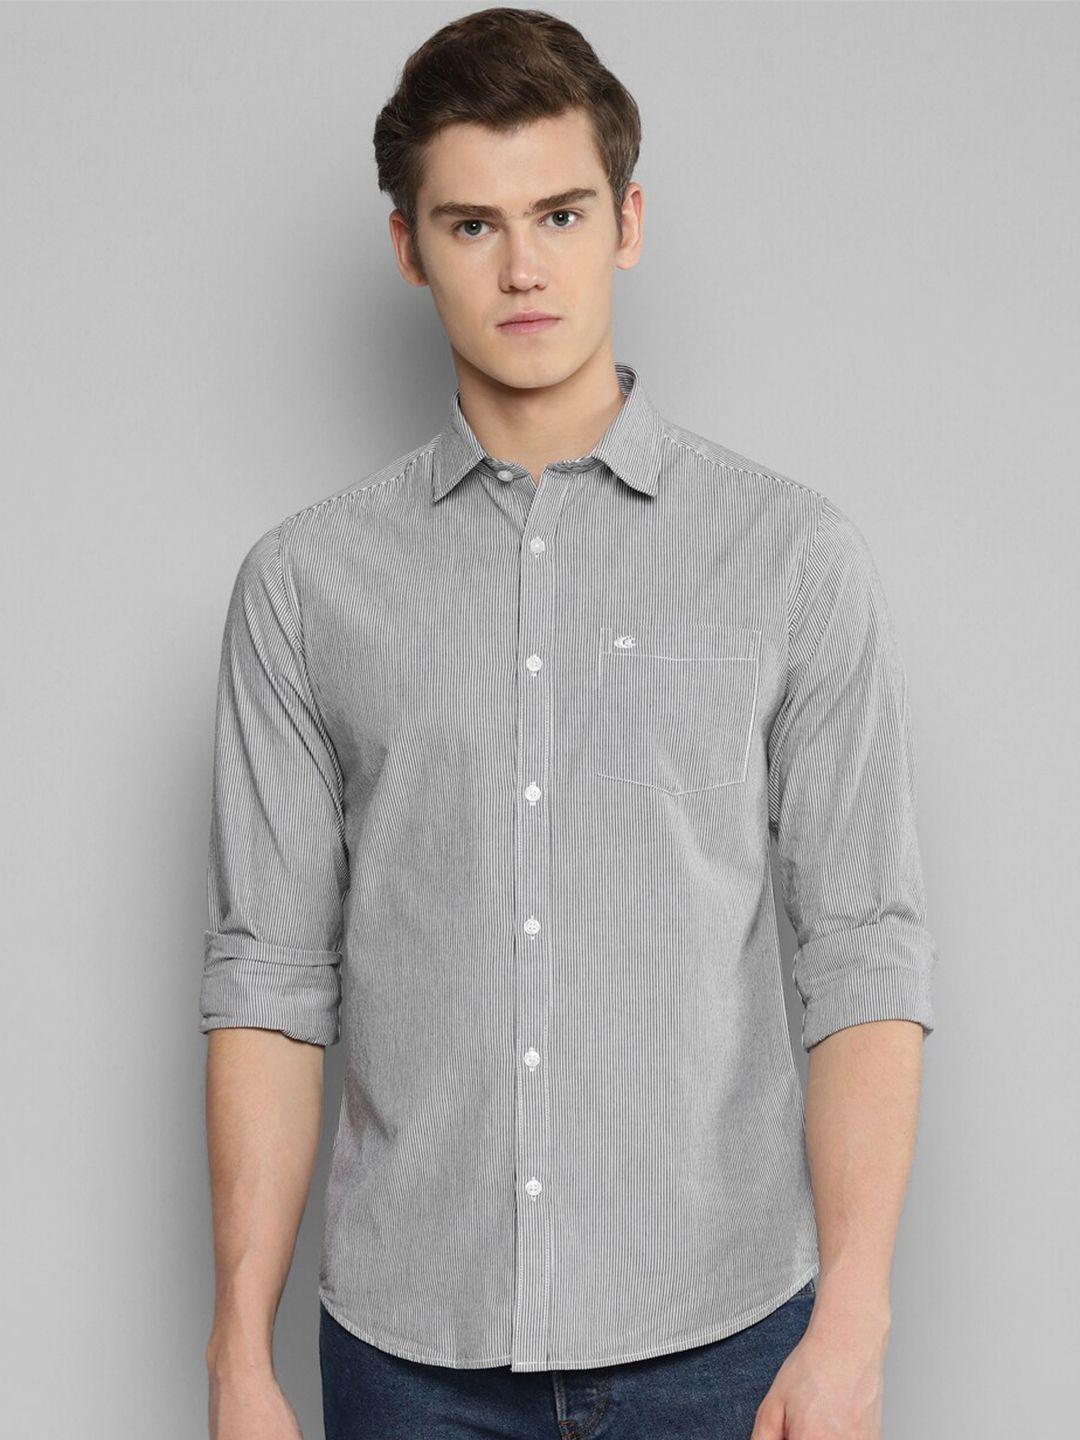 allen-cooper-vertical-striped-spread-collar-cotton-casual-shirt